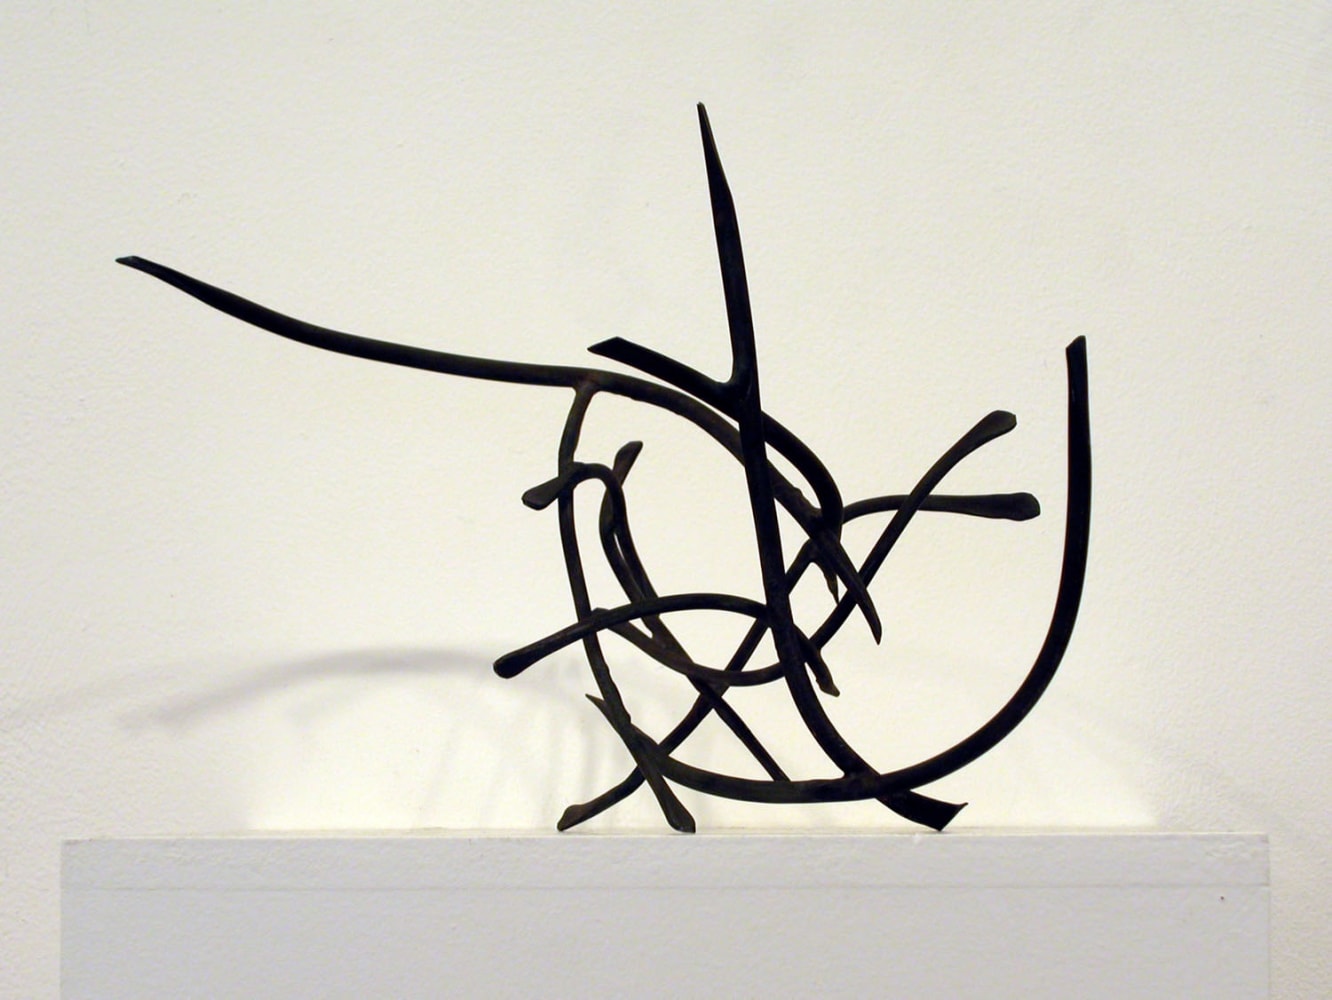 Claire Falkenstein&amp;nbsp;(1908-1997)&amp;nbsp;

Untitled Composition, 1960

copper tubing
8 x 12 x 6 in; 20.3 x 30.5 x 15.2 cm